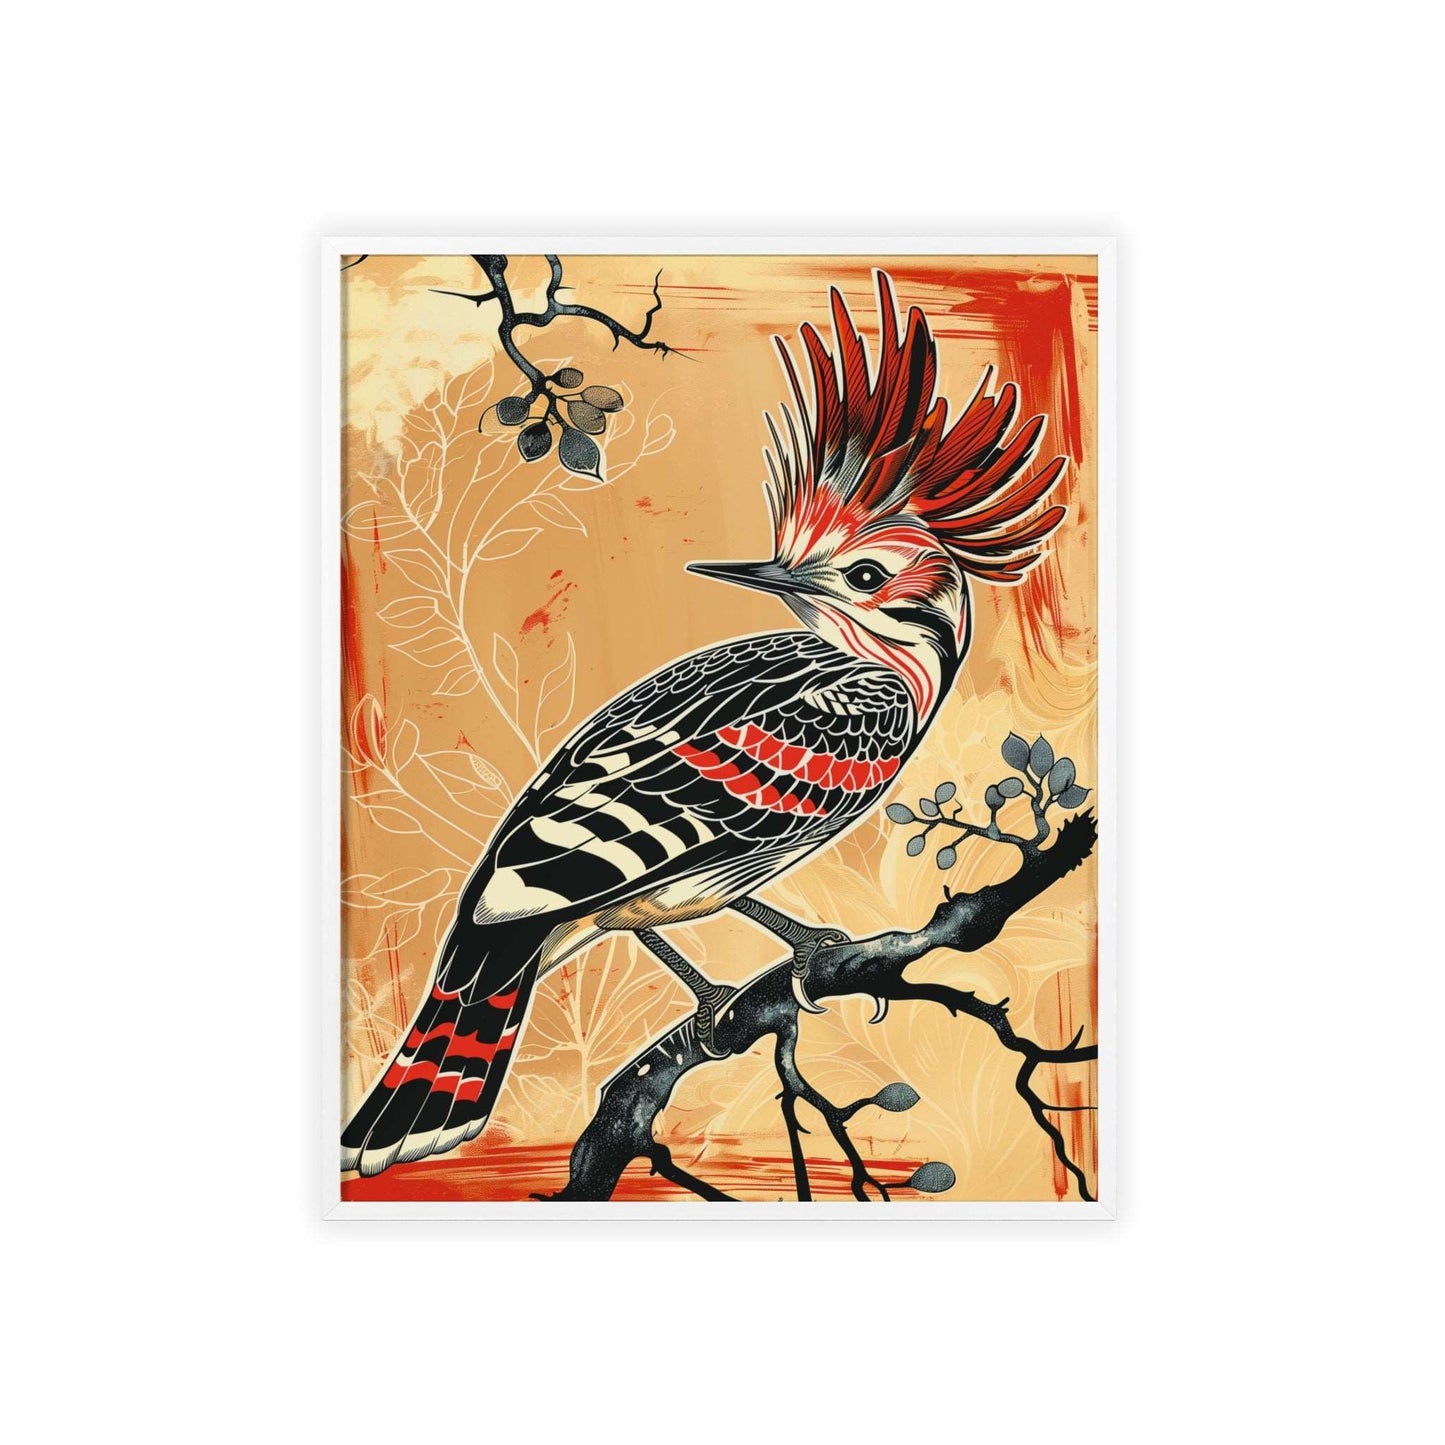 woodpecker poster, bird art, vibrant print, nature decor, wildlife illustration, red crest, birdwatching, wall art, decorative background, nature lovers